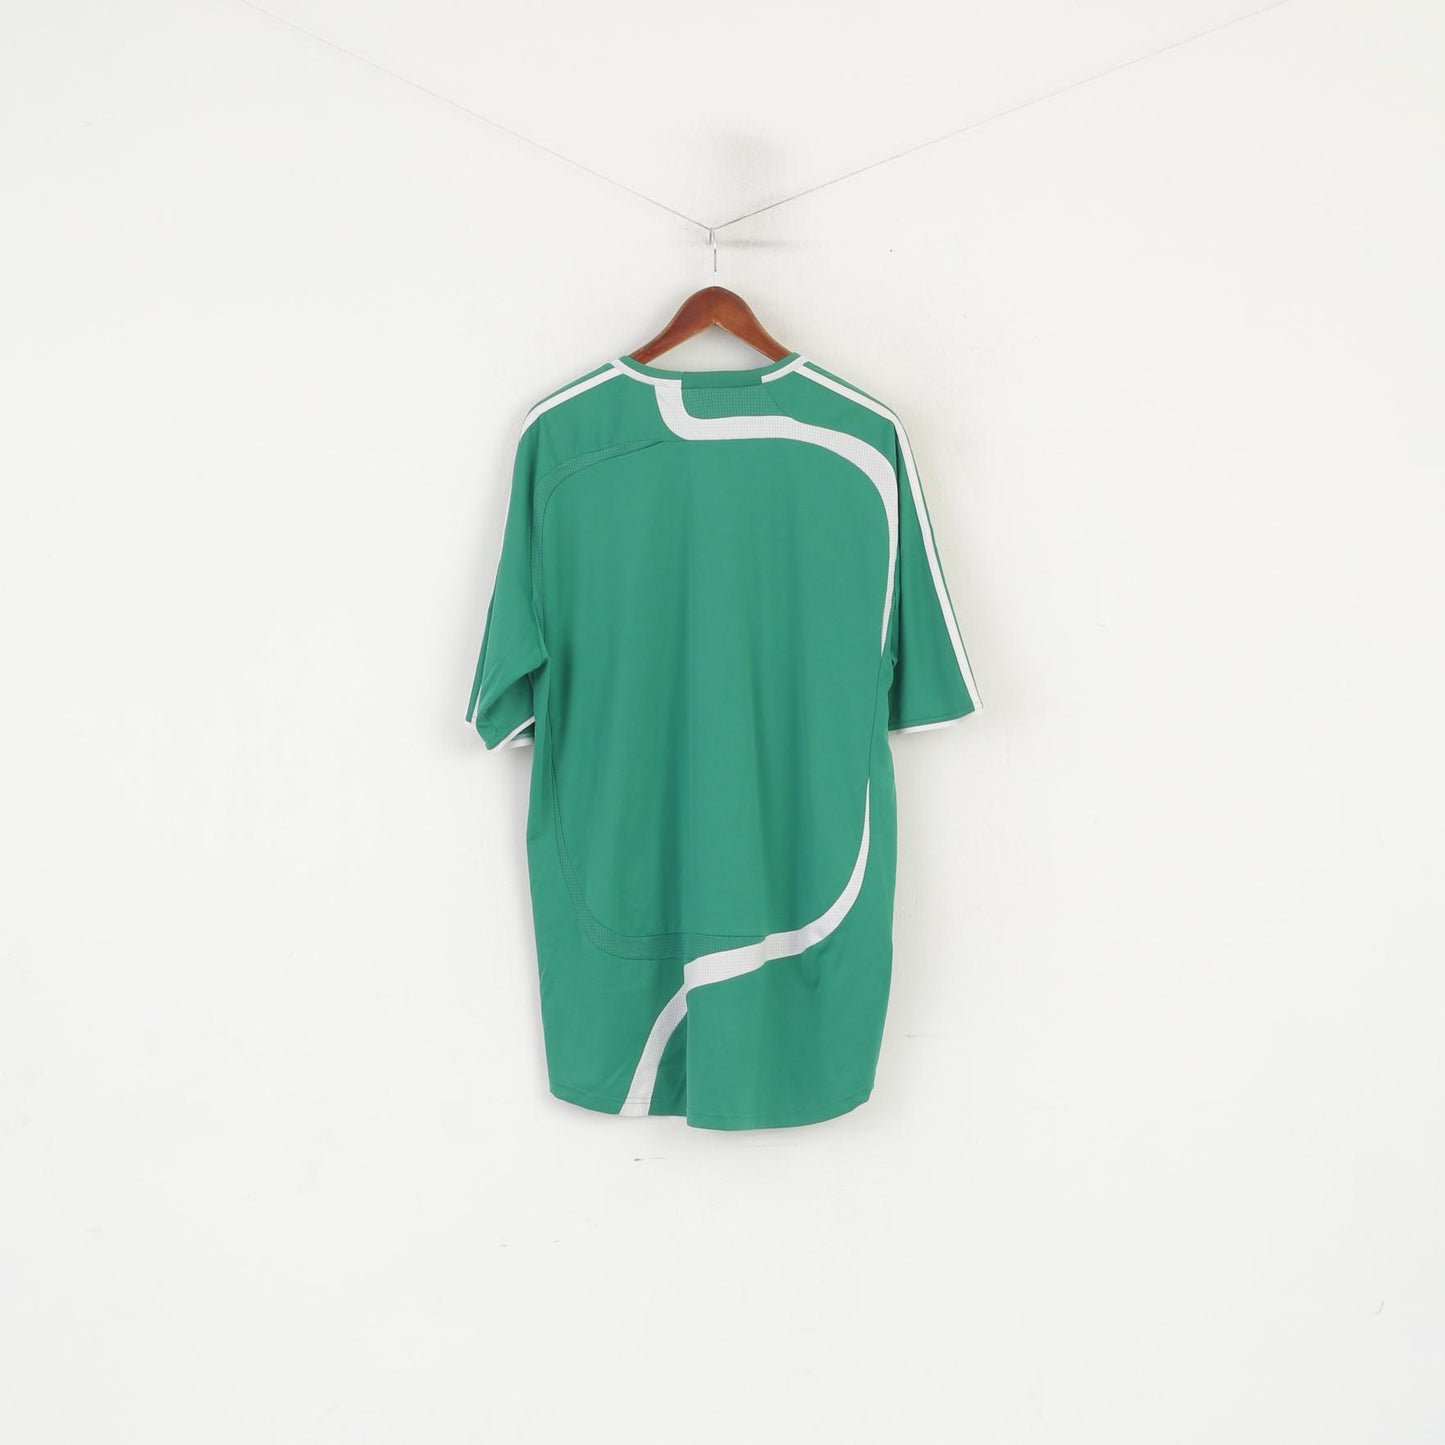 Adidas Men XXL Shirt Green Shiny Vintage Sportswear Jersey Training Top